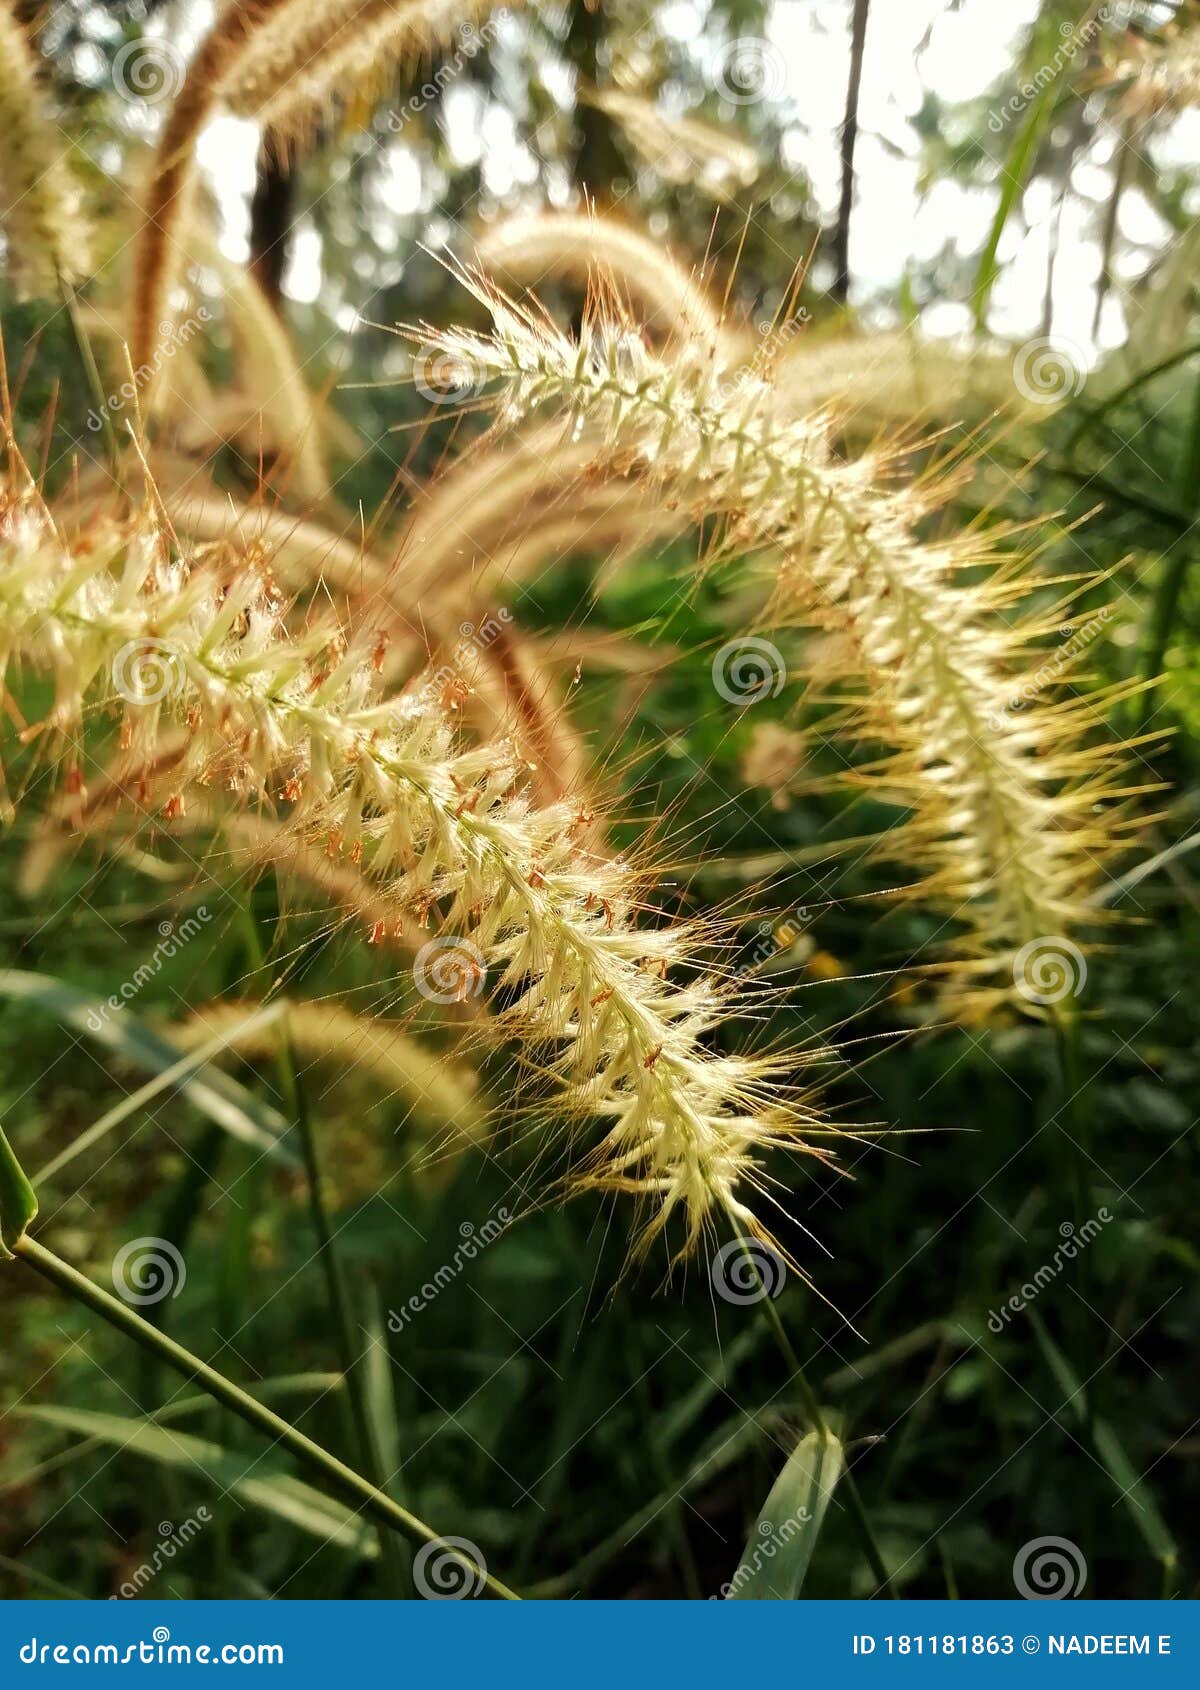 Golden Grass on the Sunlight Stock Image - Image of garden, farmland